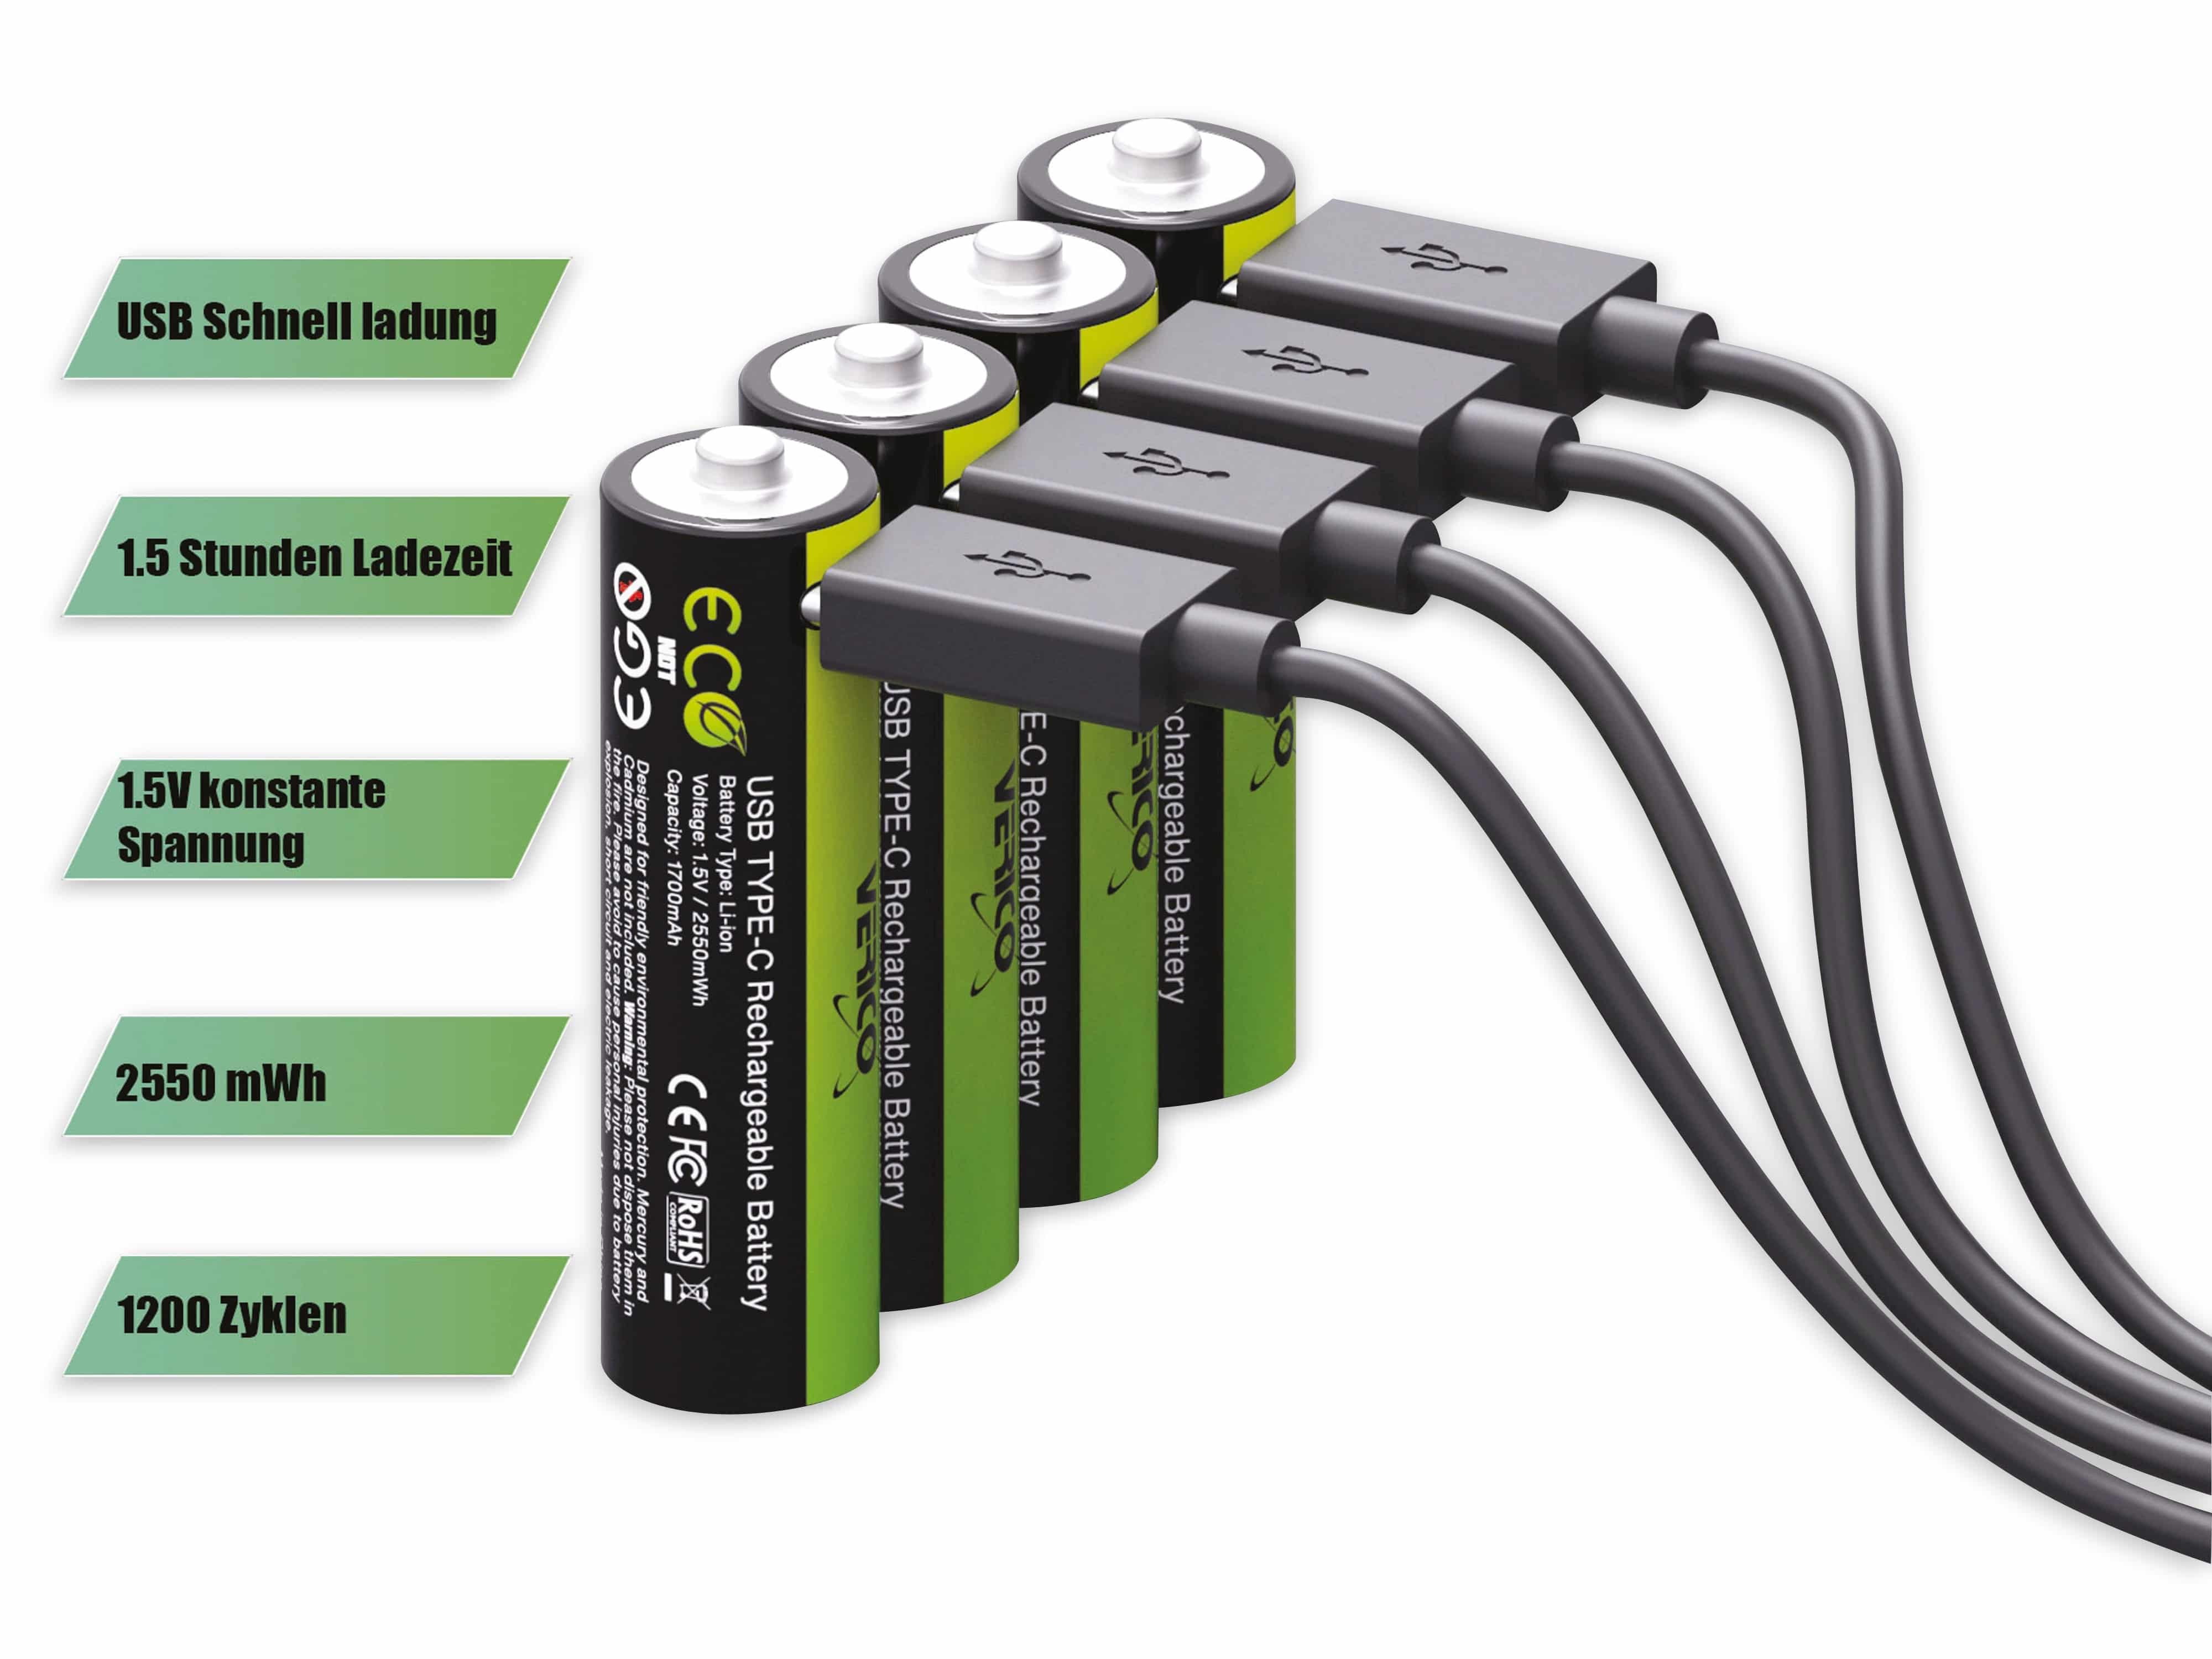 VERICO Li-Ion-Akku Loop Energy AA, mit USB-C Buchse, 4er Pack